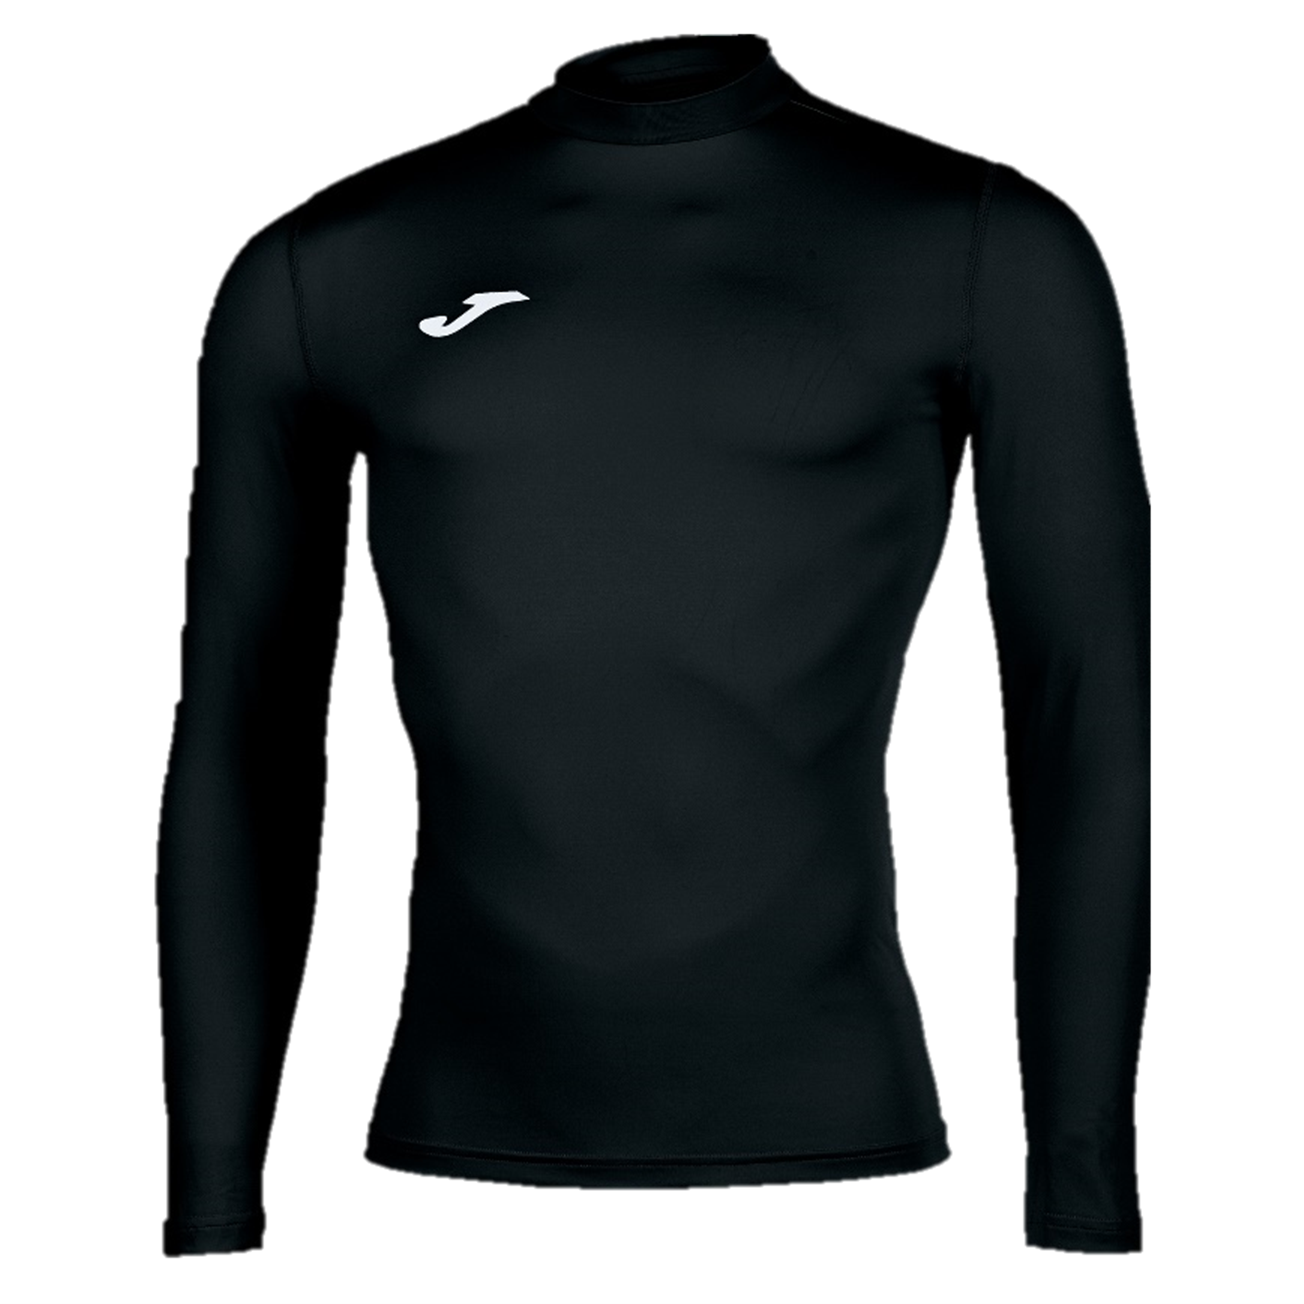 Kewford Eagles Joma Black Base Layer Shirt (Away/Training)